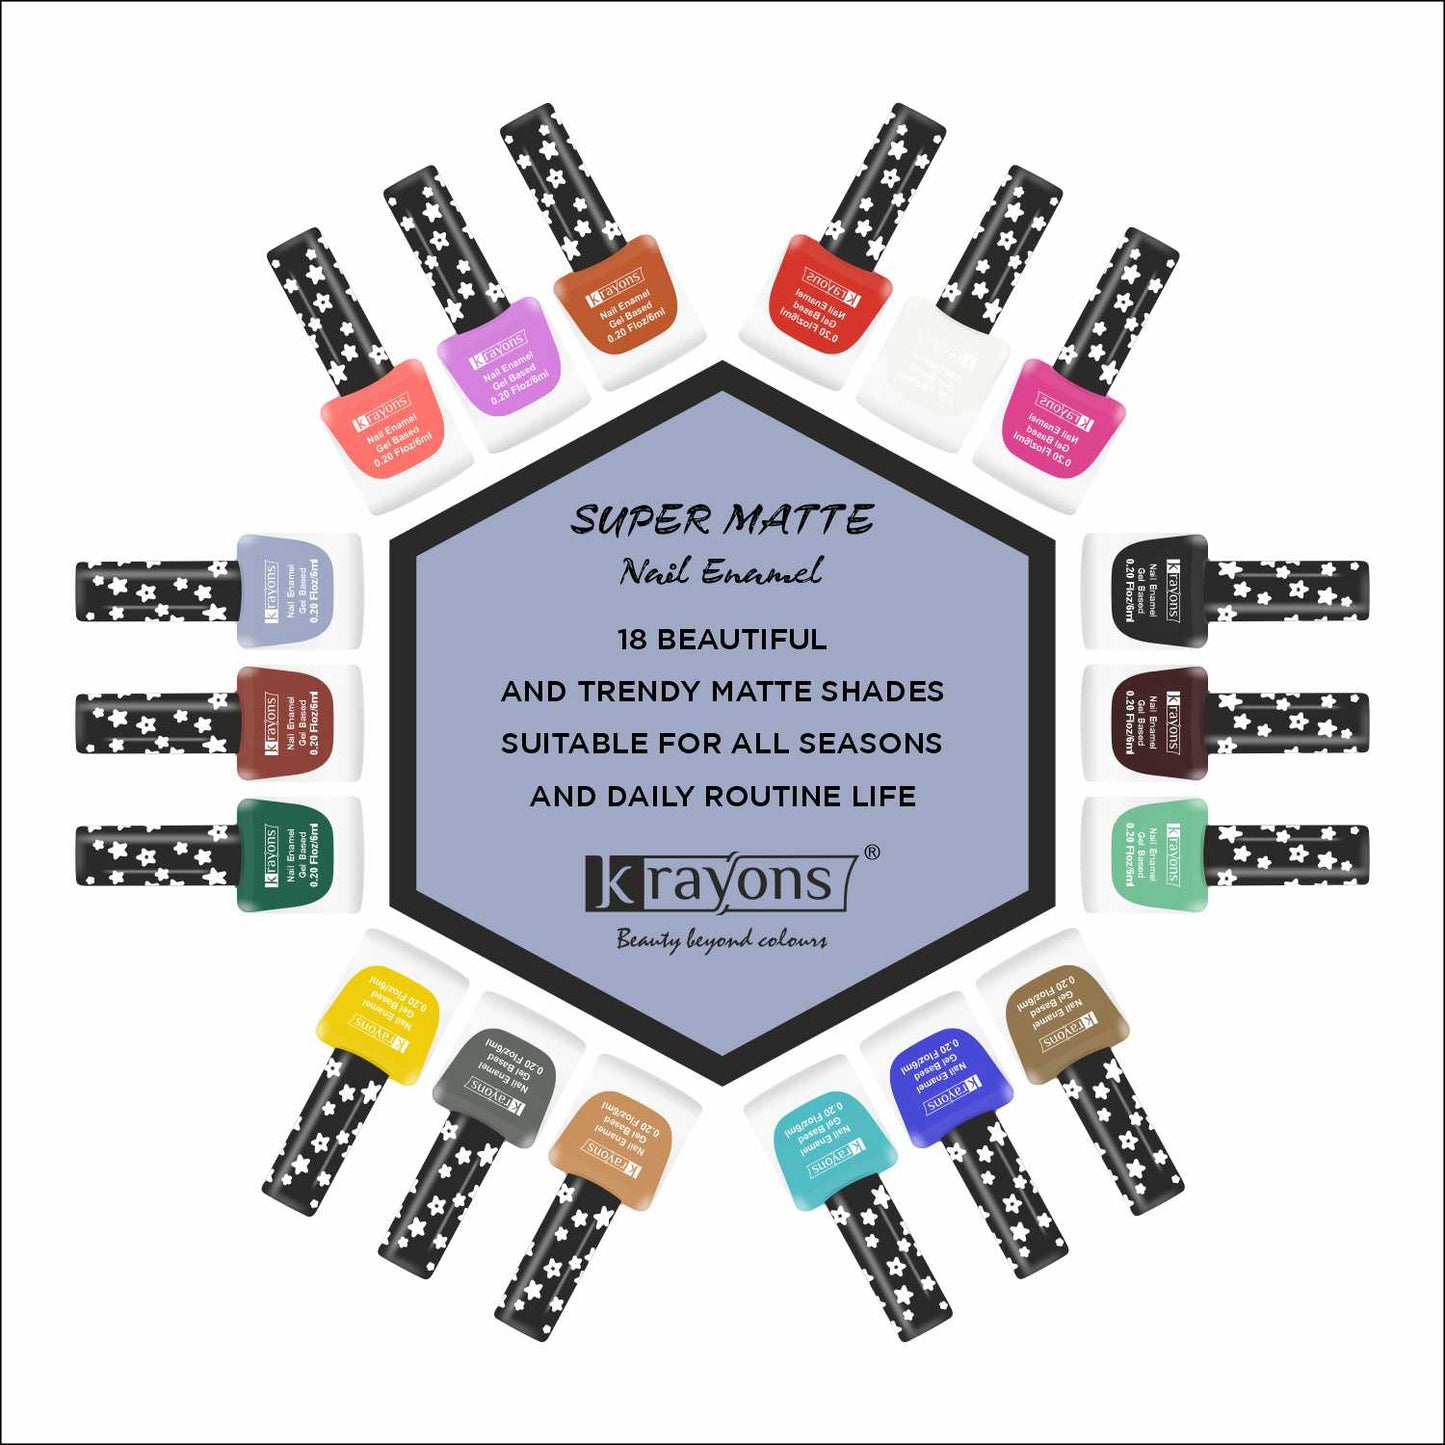 Krayons Cute Super Matte Finish Nail Enamel, Quick Dry, LongLasting, Blossom Peach, Mint Green, Chestnut Matte, 6ml Each (Pack of 3)